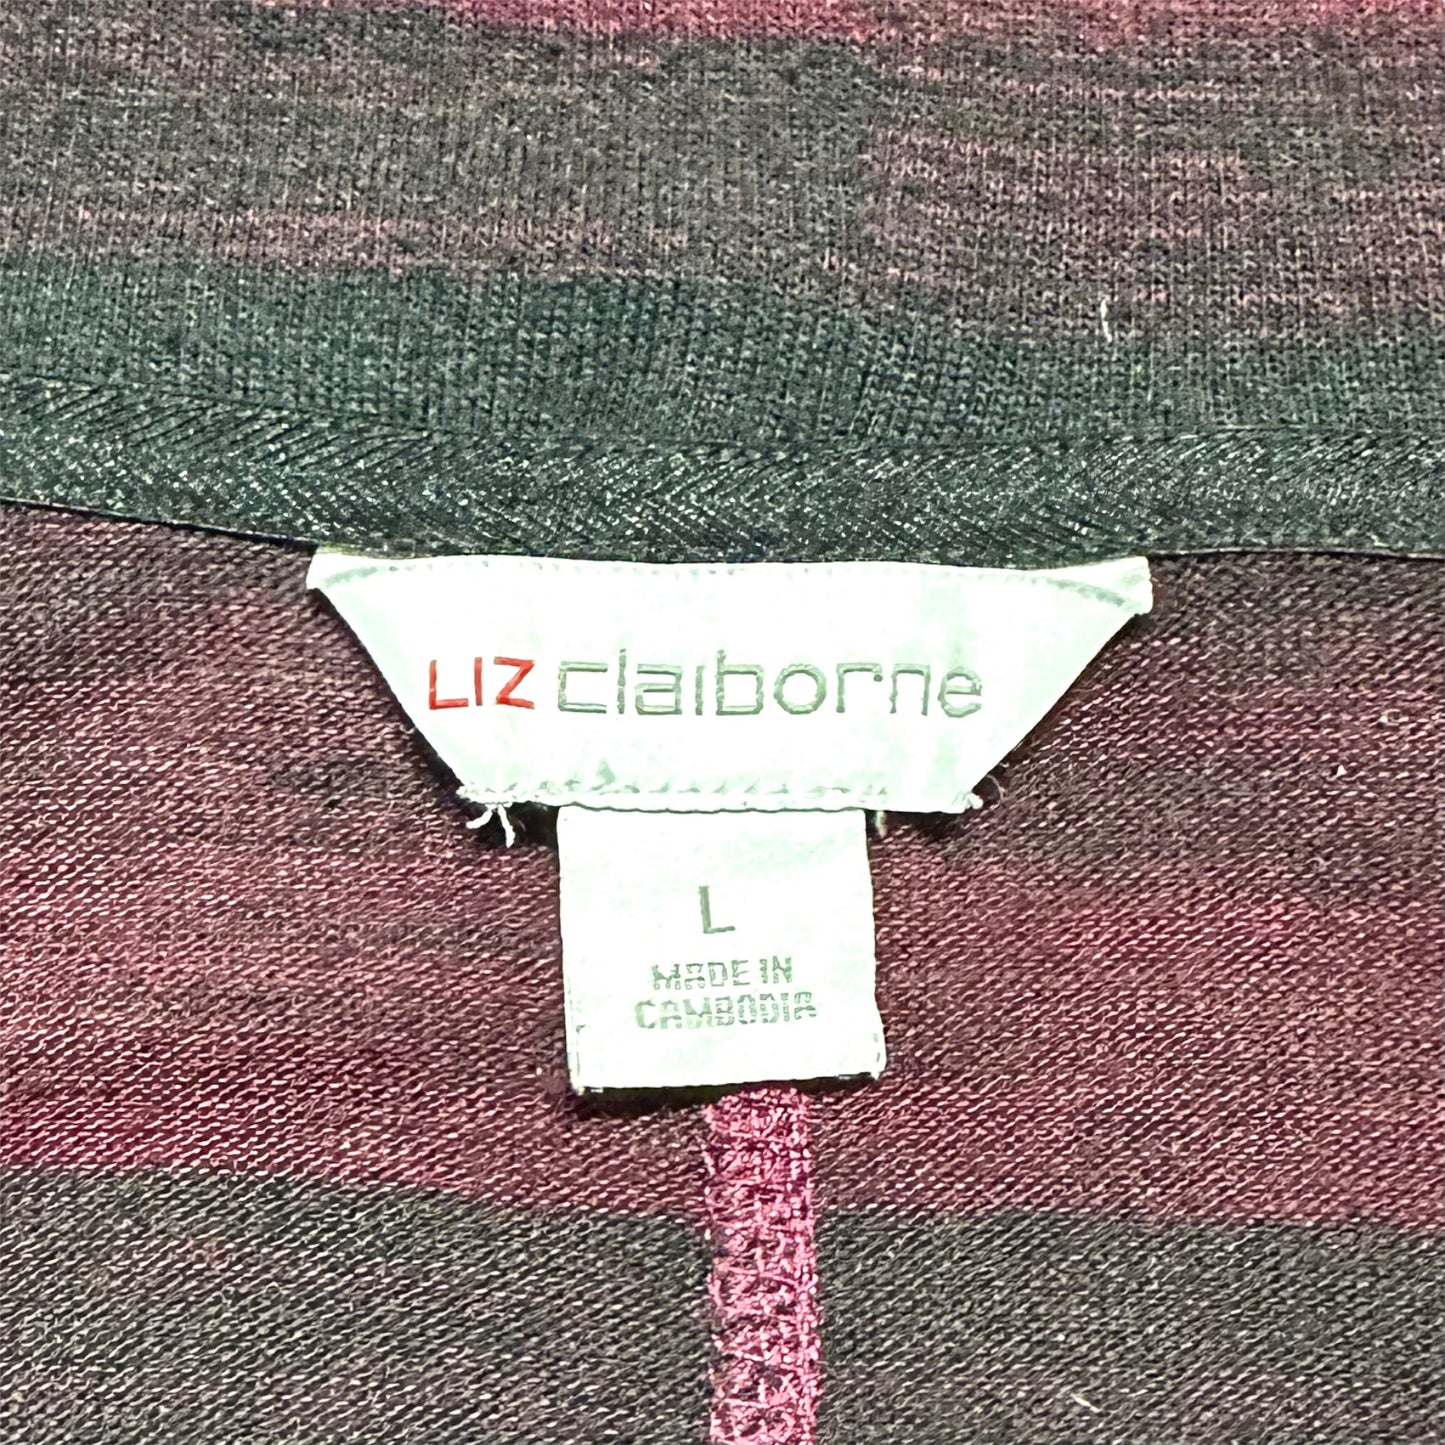 "Liz claiborne" Gradation border pattern cotton cardigan